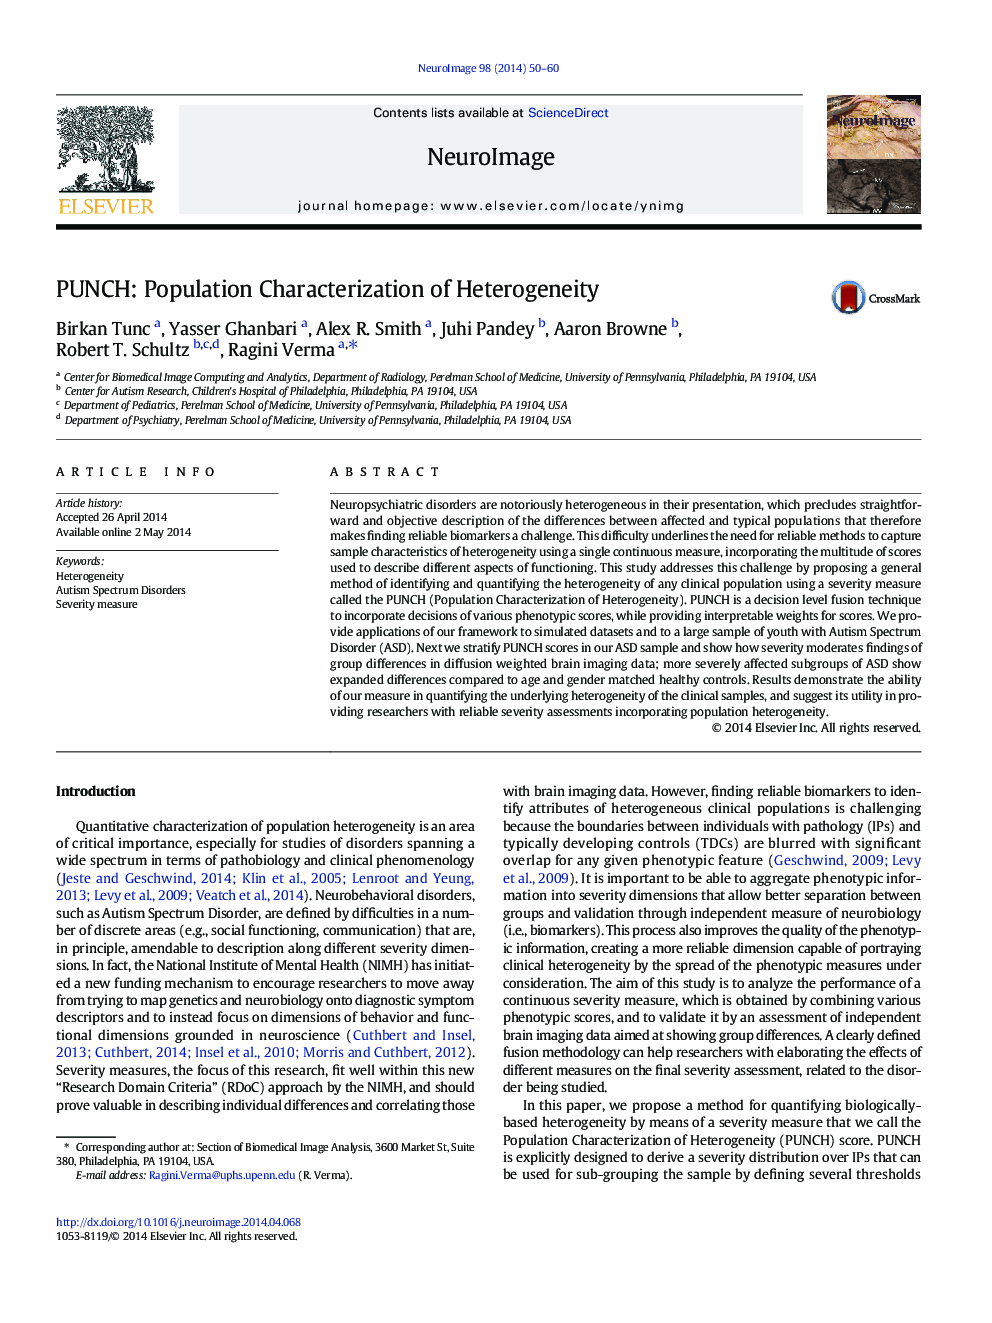 PUNCH: Population Characterization of Heterogeneity